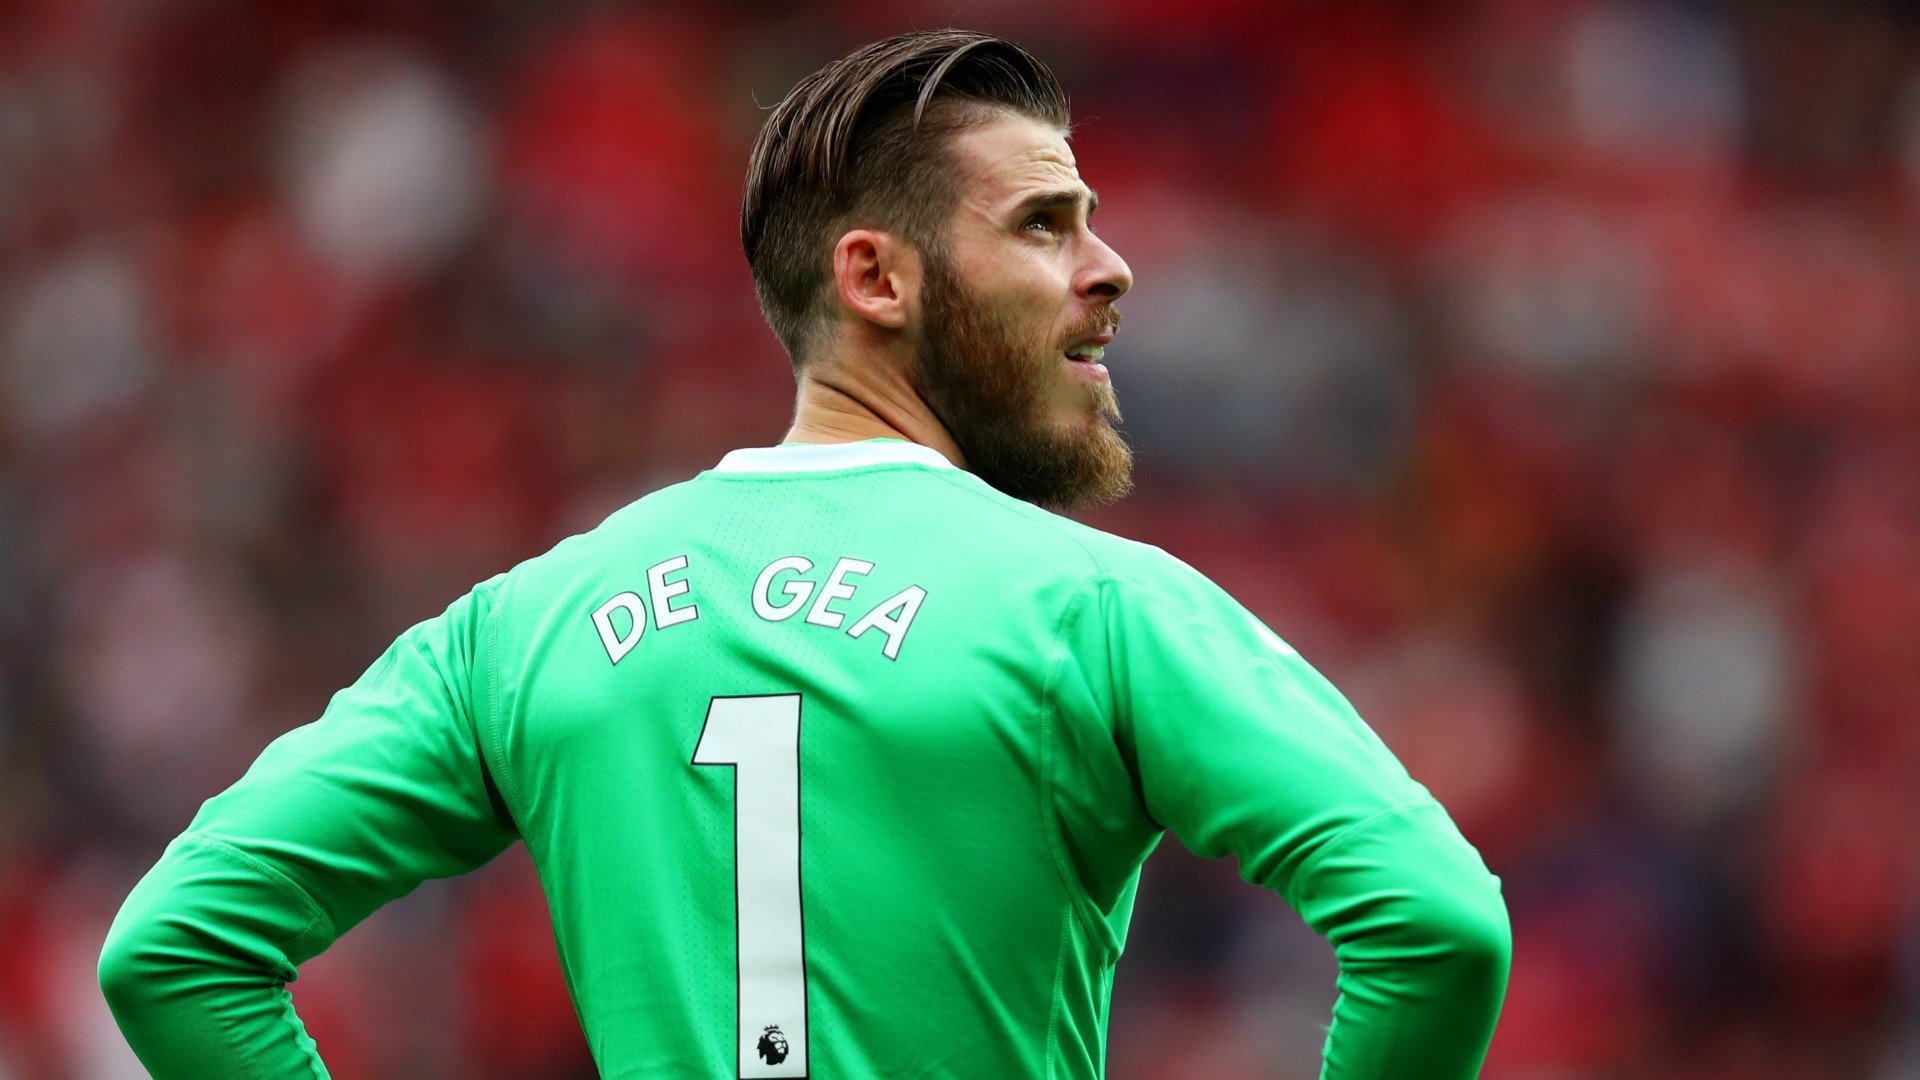 El Manchester United espera renovar el contrato de David De Gea